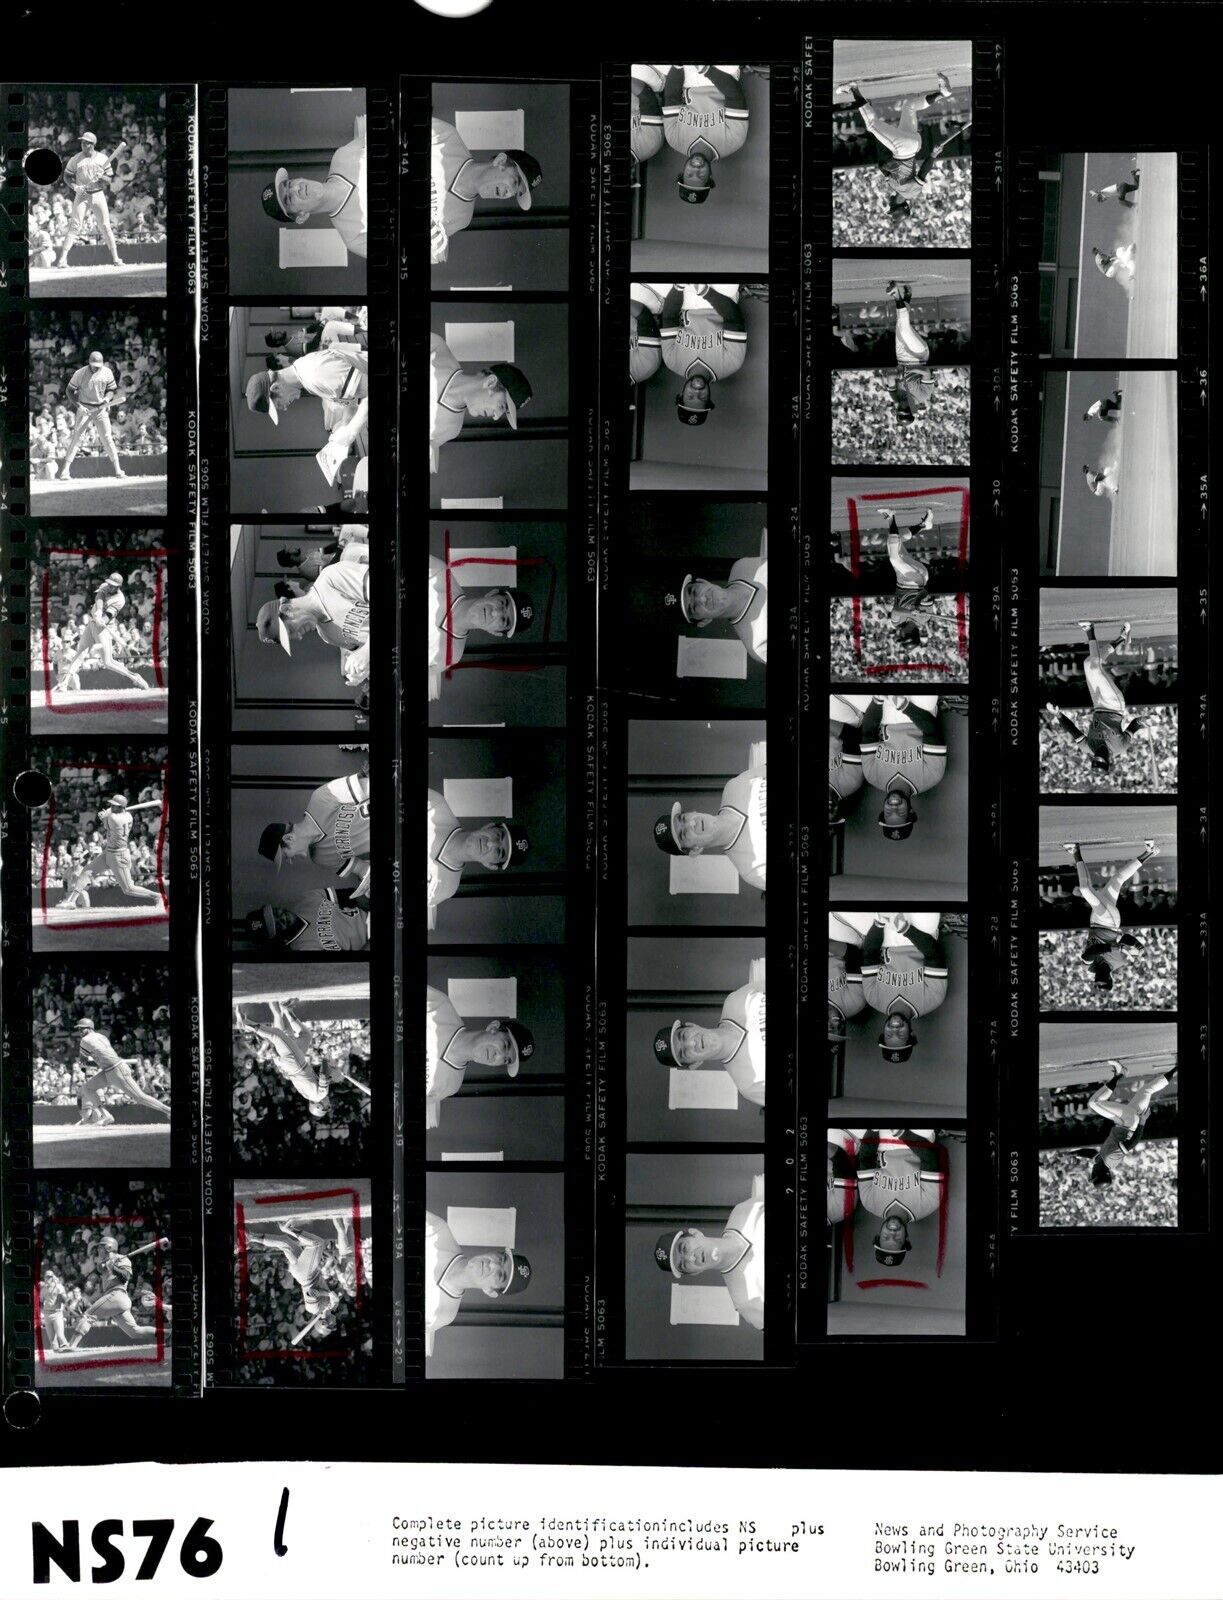 LD361 1977 Original Contact Sheet Photo SAN FRANCISCO GIANTS vs CINCINNATI REDS